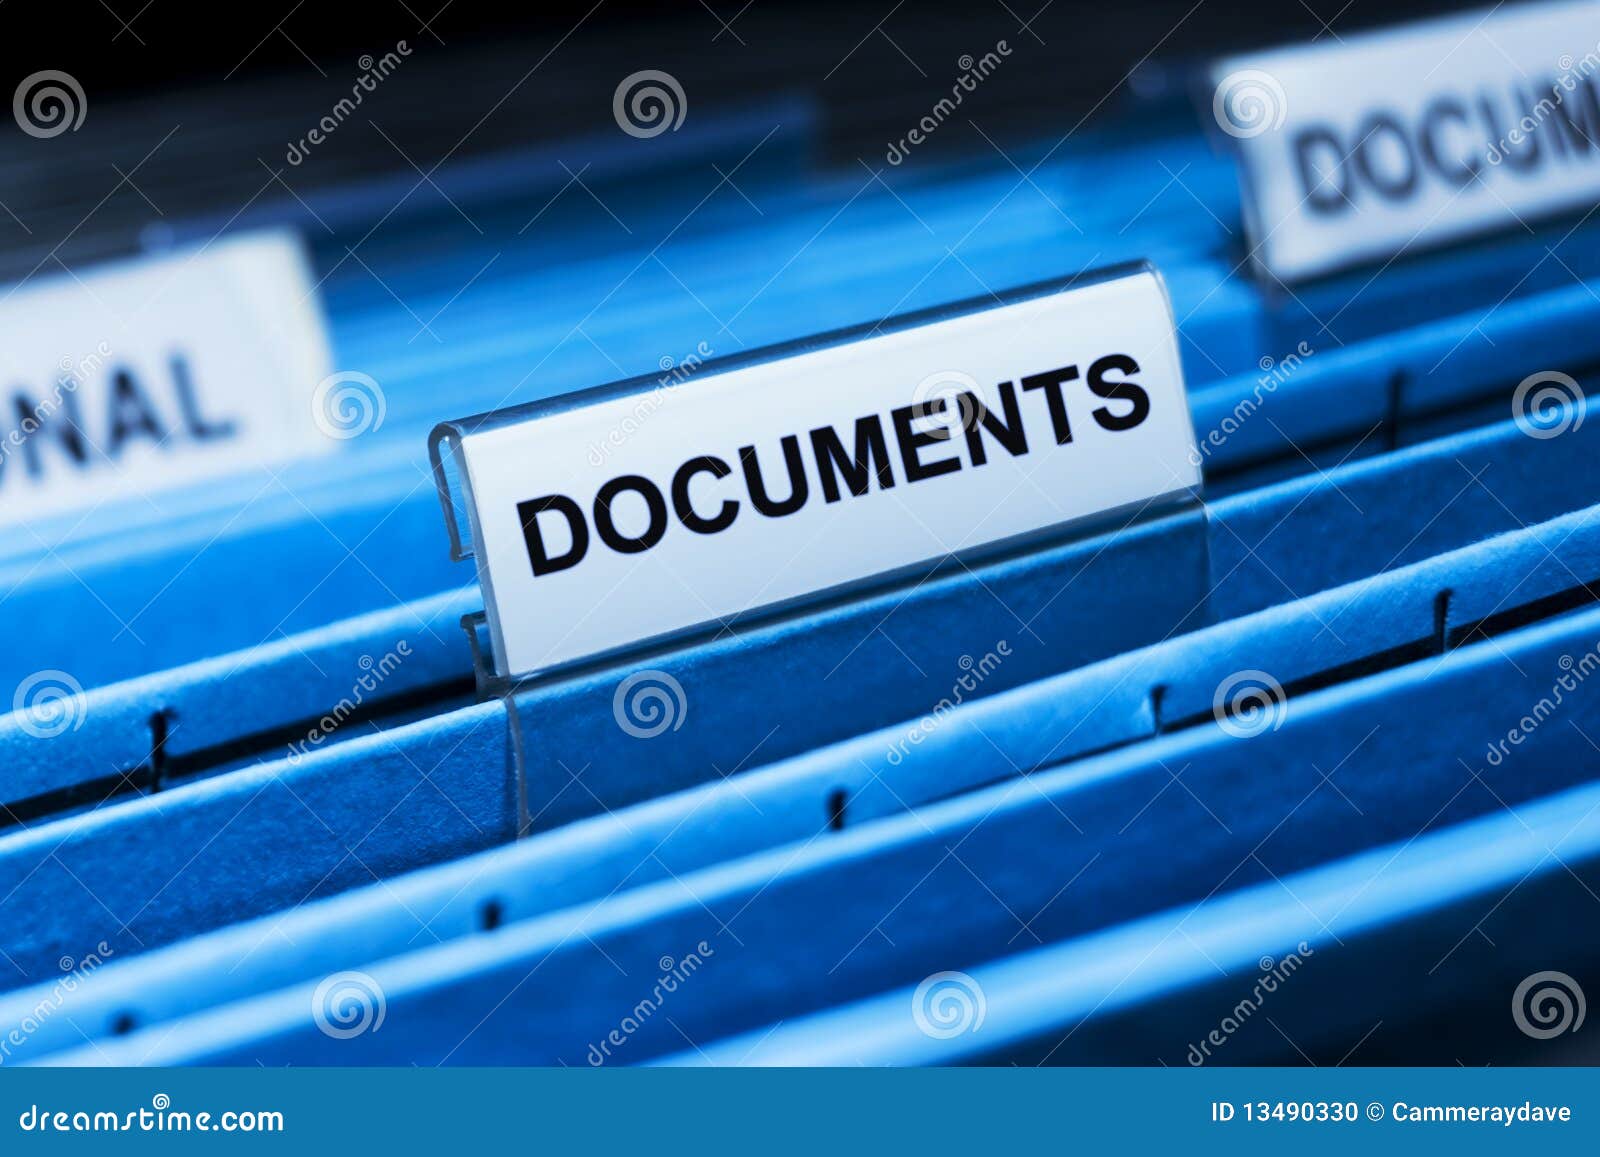 Documents File Stock Photo - Image: 13490330